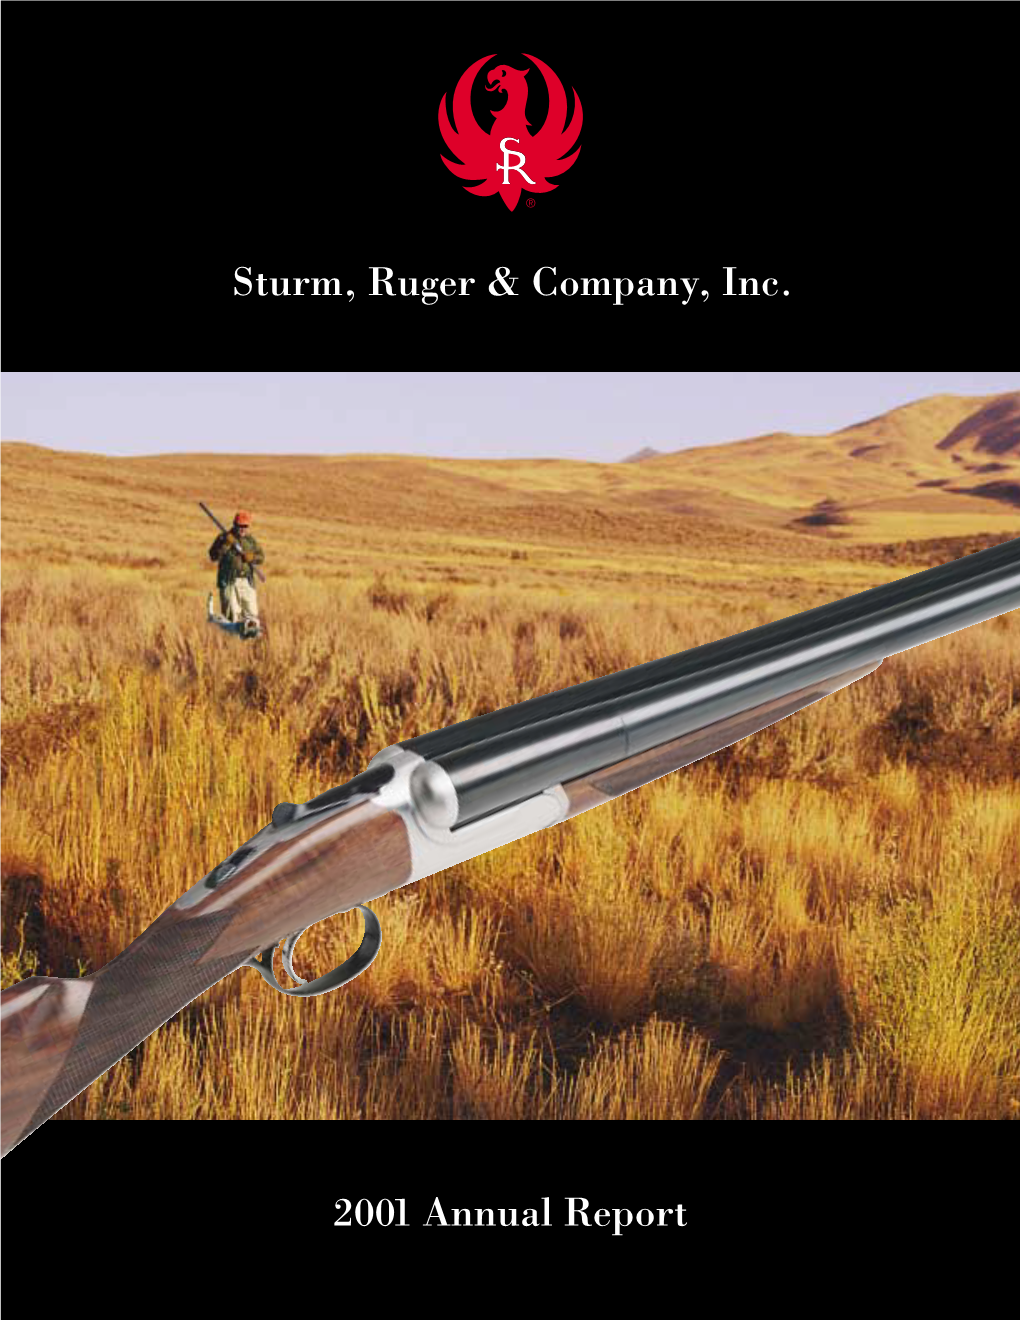 Sturm, Ruger & Company, Inc. 2001 Annual Report